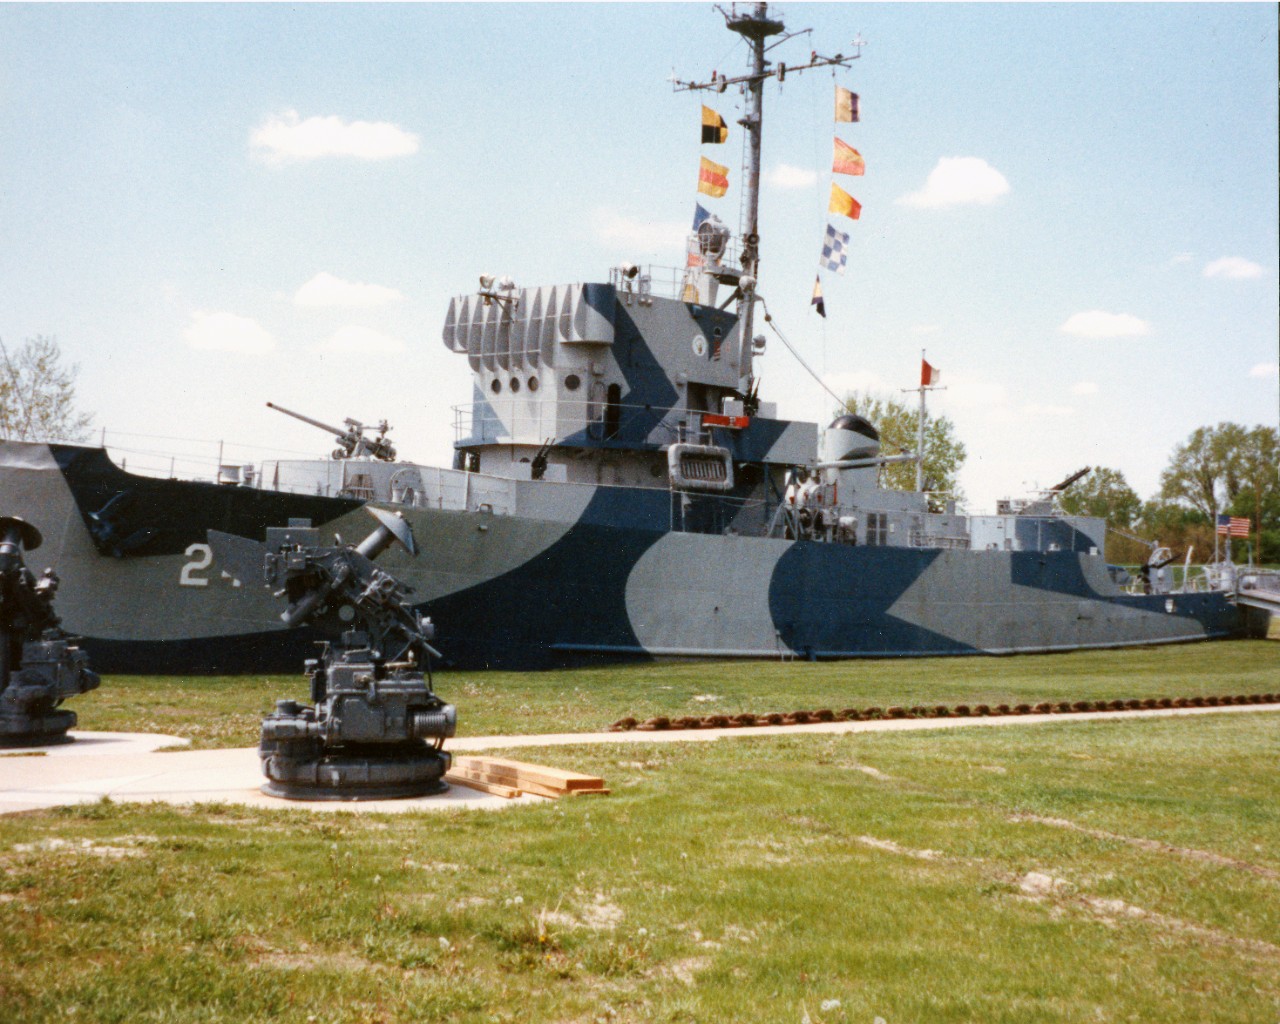 Collection photo # S-556-A.01 - USS Hazard (AM-240) on exhibit at Freedom Park, Omaha, NE 